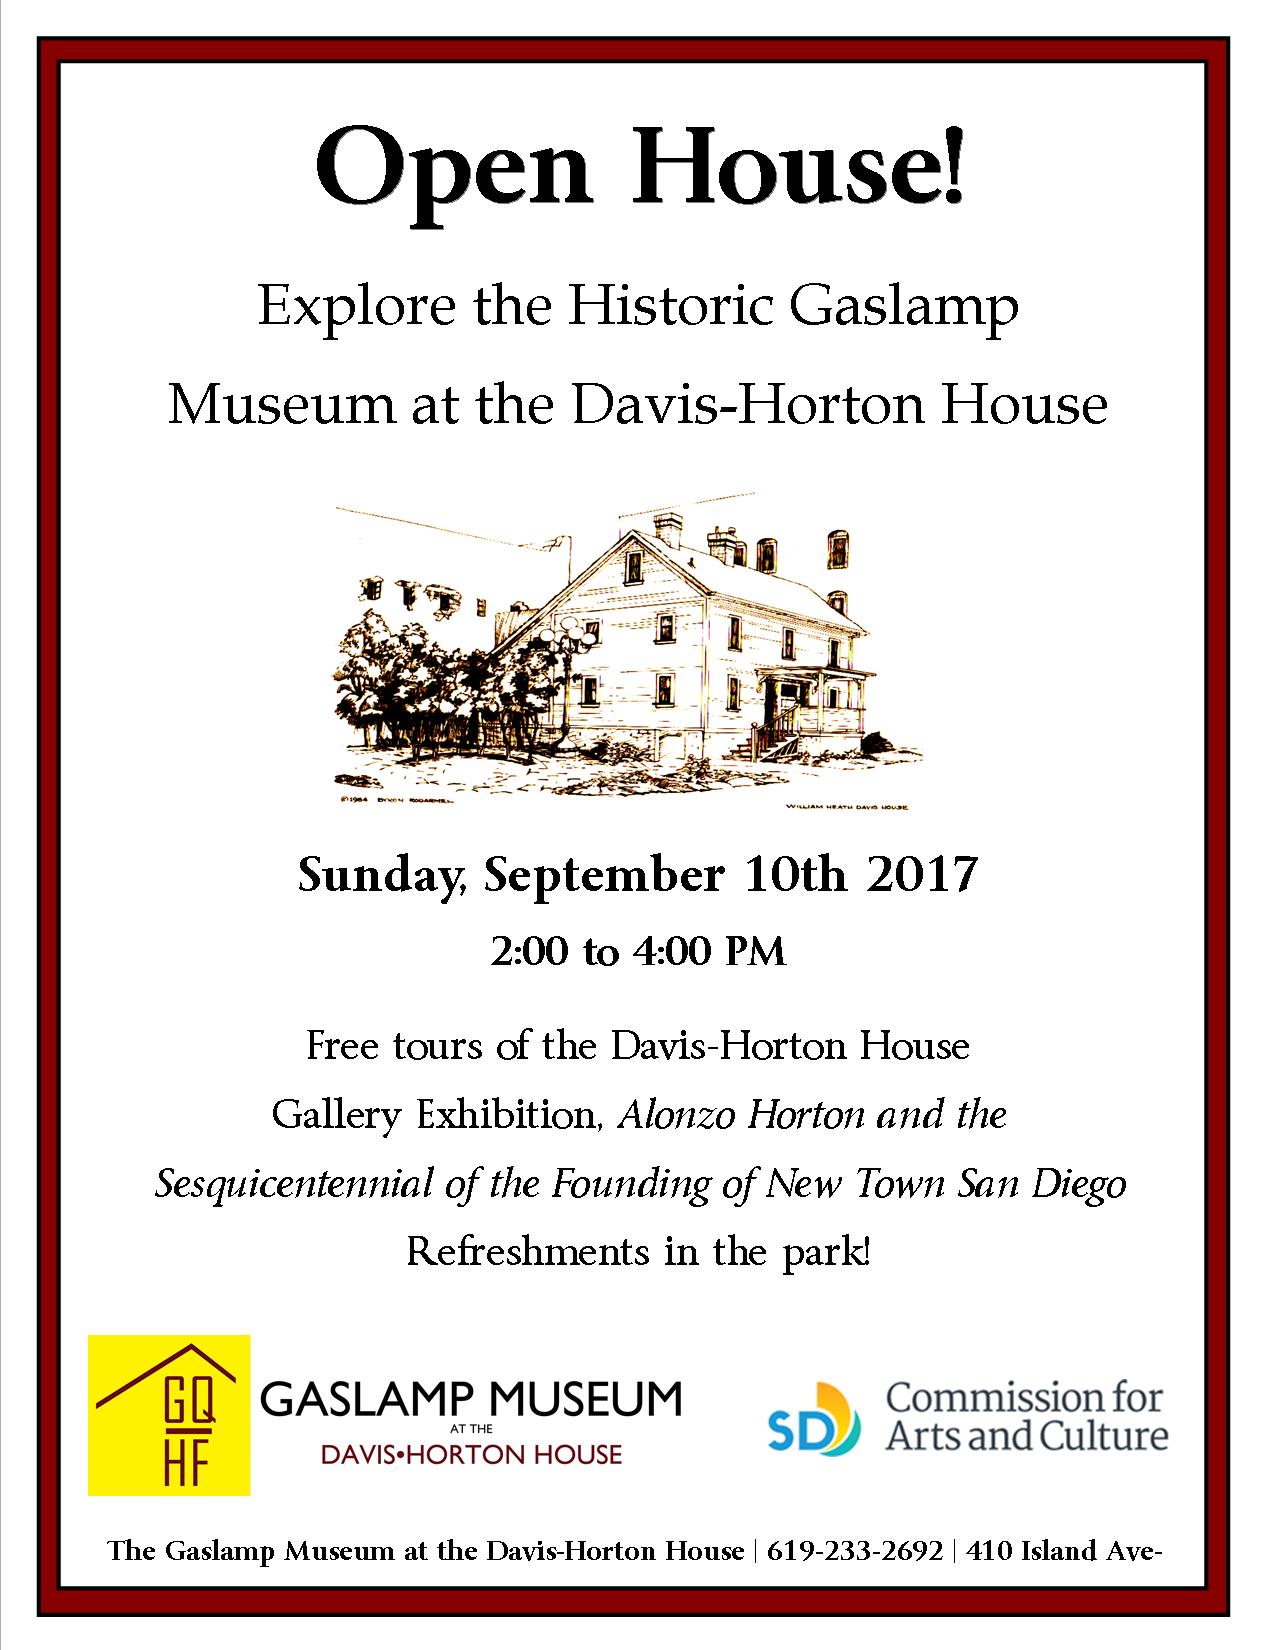 downtown san diego gaslamp quarter gaslamp museum at the davis-horton house